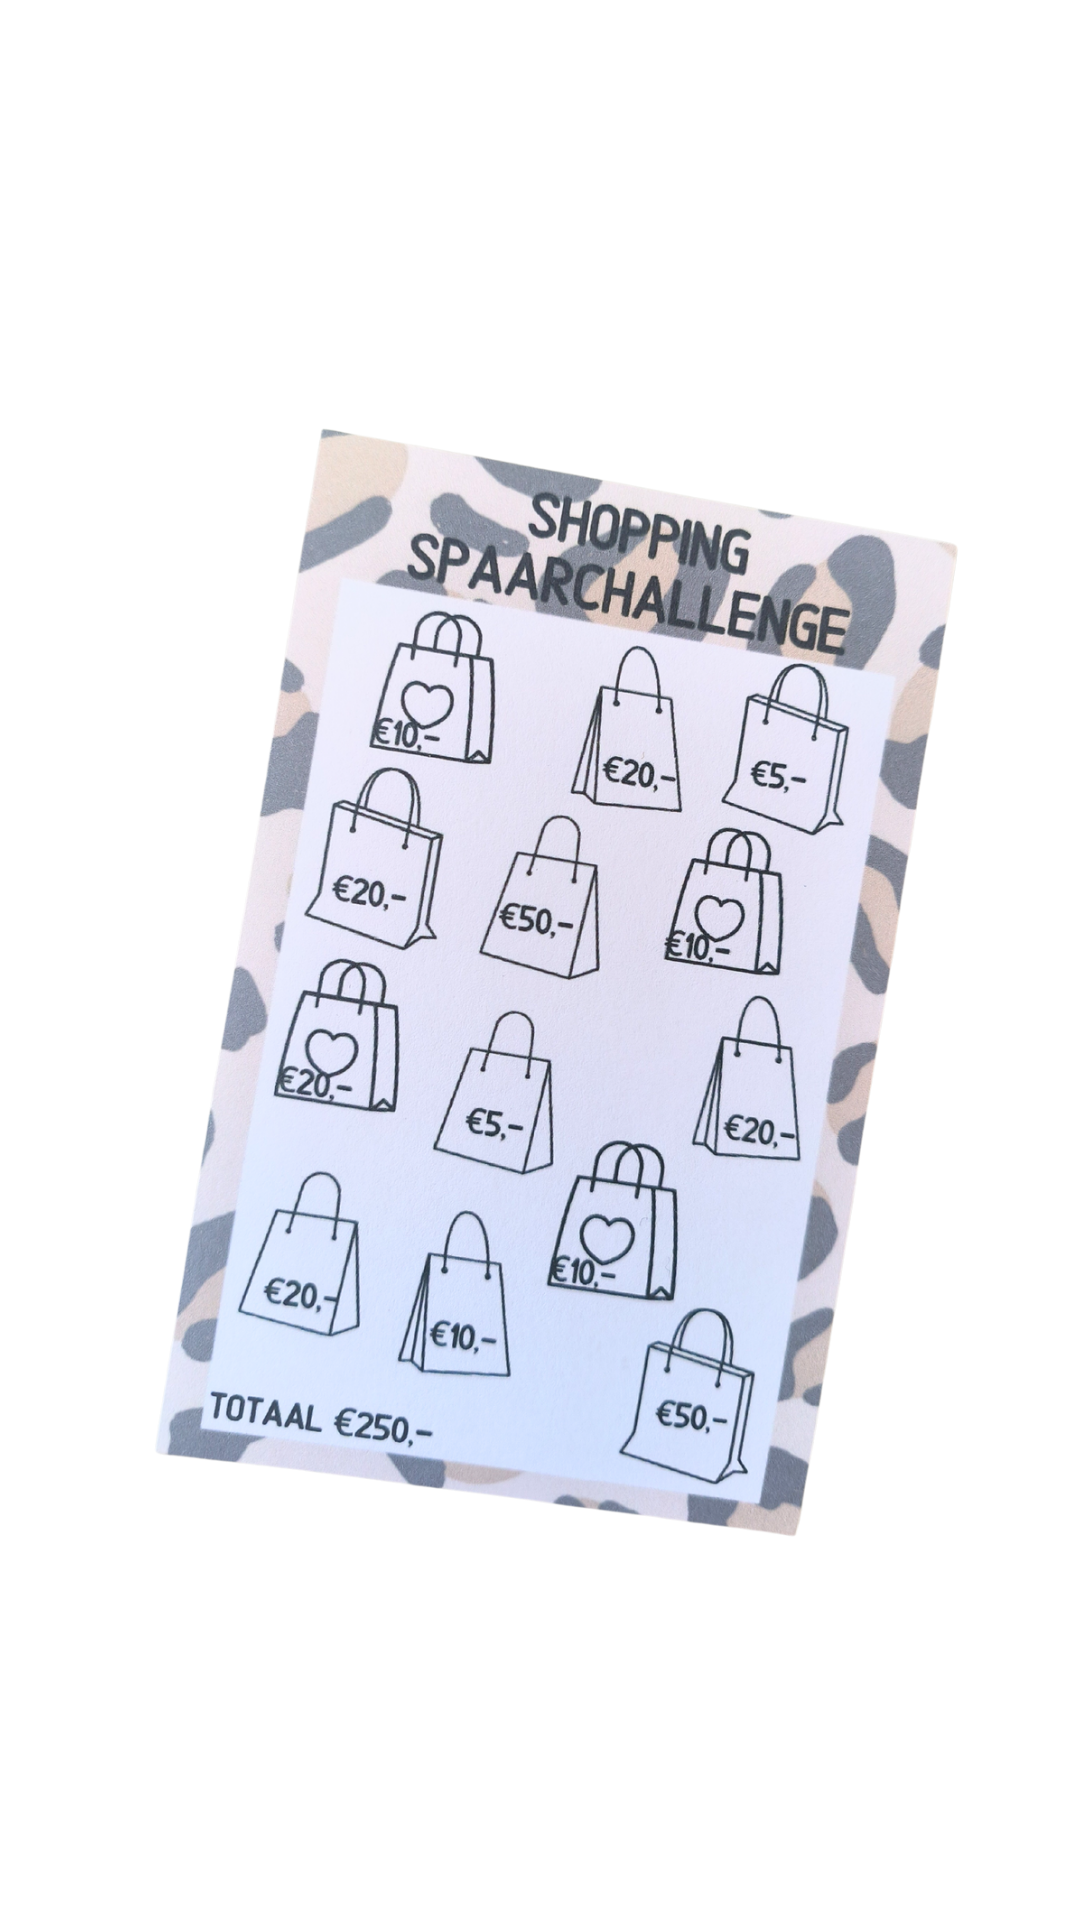 Shopping challenge